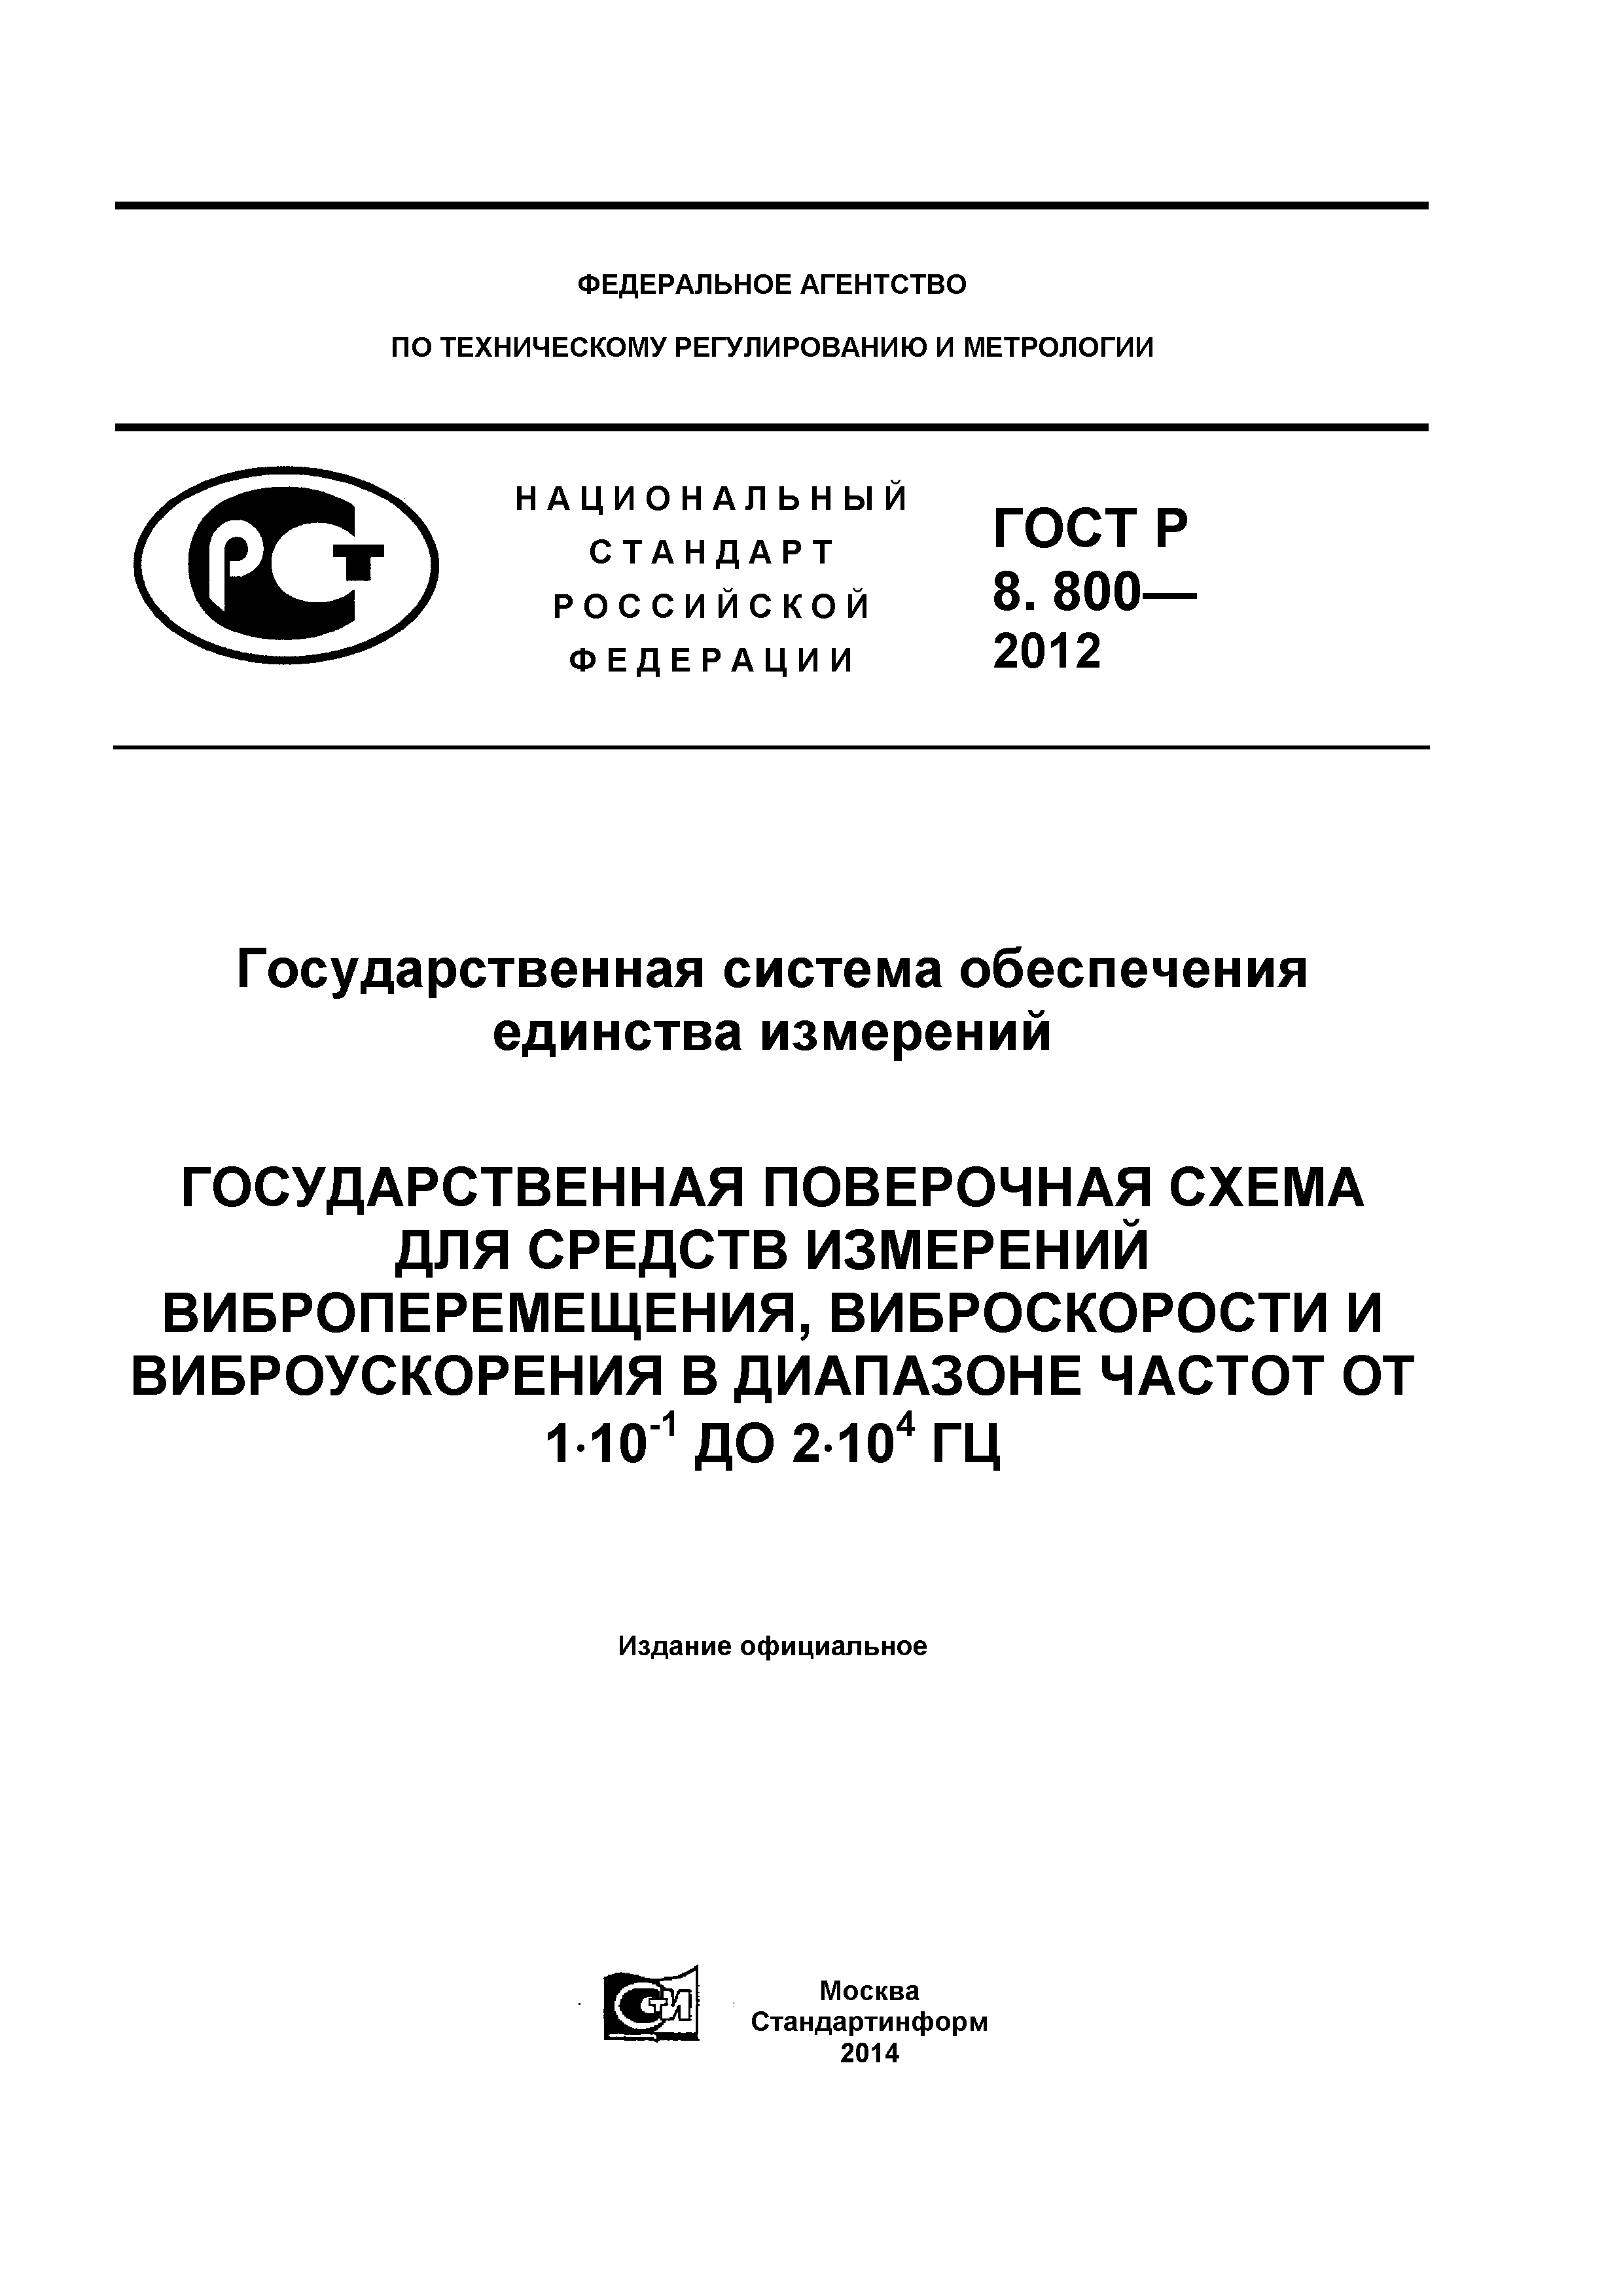 ГОСТ Р 8.800-2012